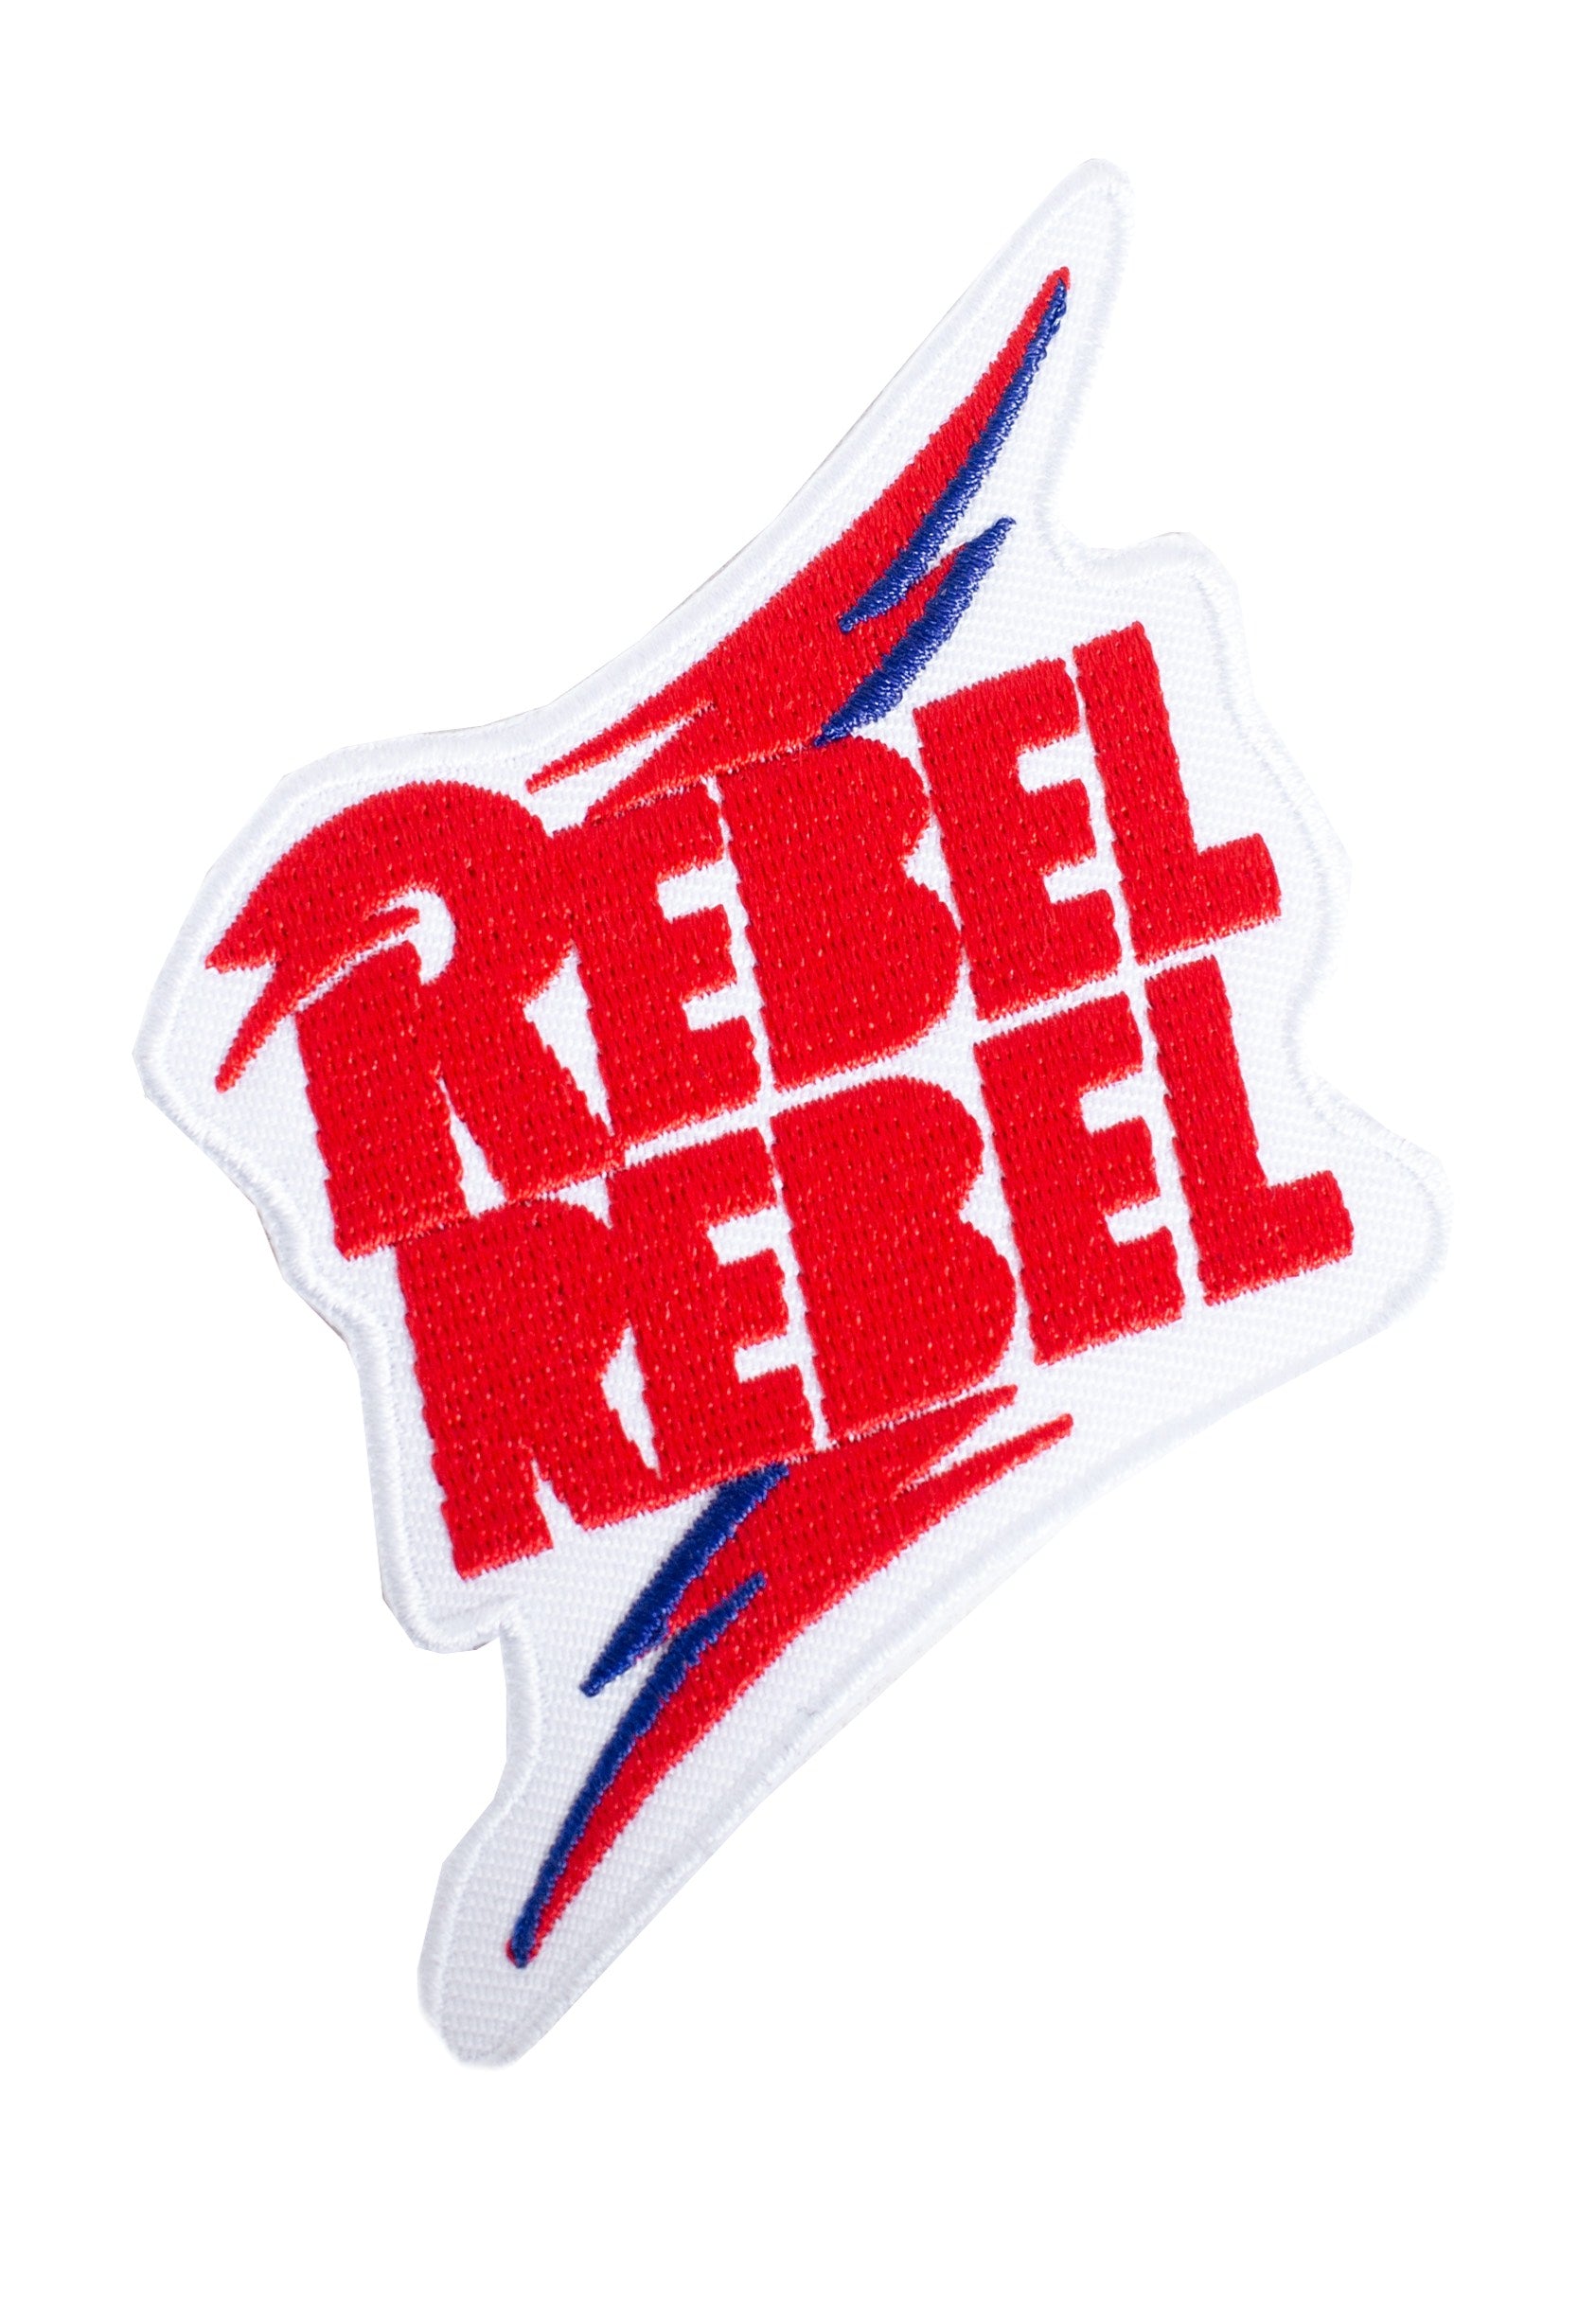 David Bowie - Rebel Rebel - Patch | Neutral-Image